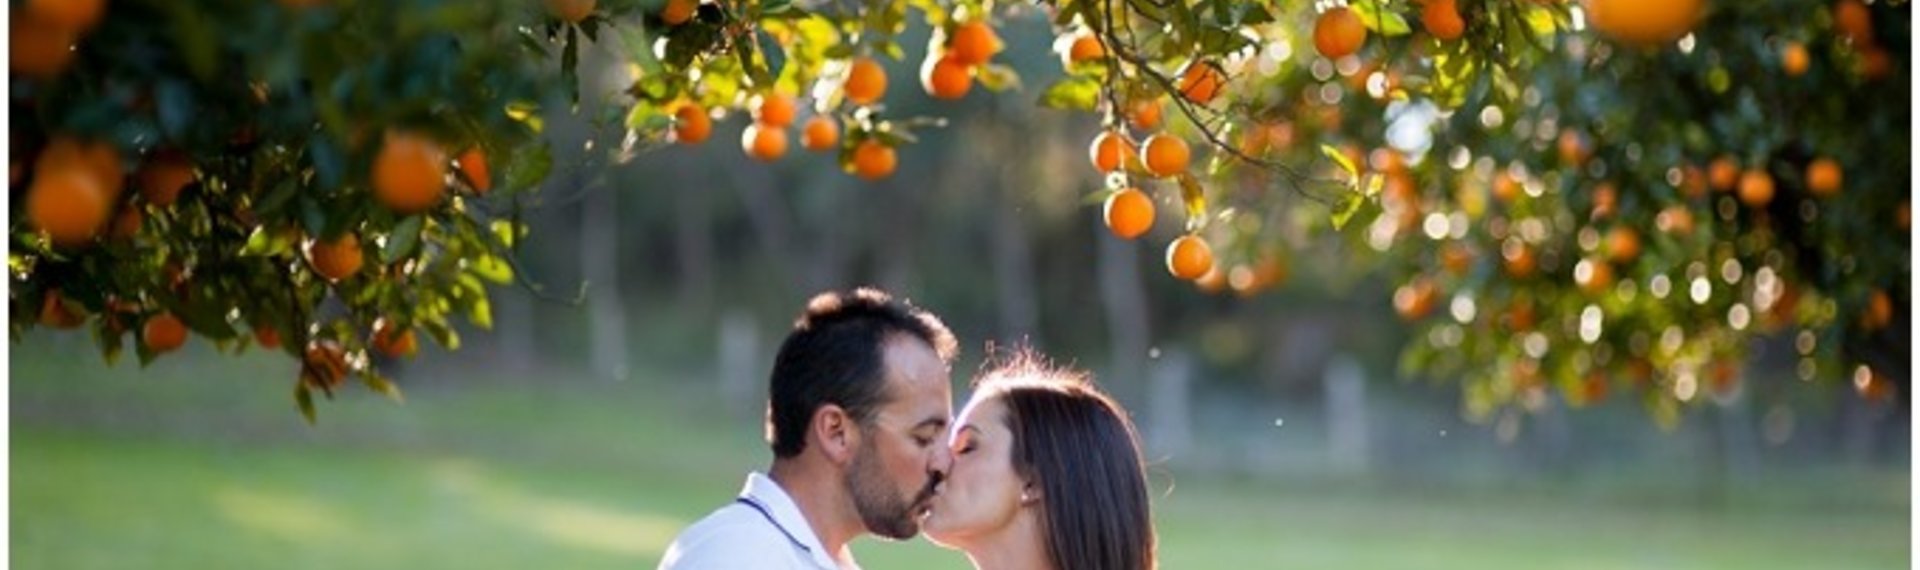 Carena & Michael | Perth Wedding Photography